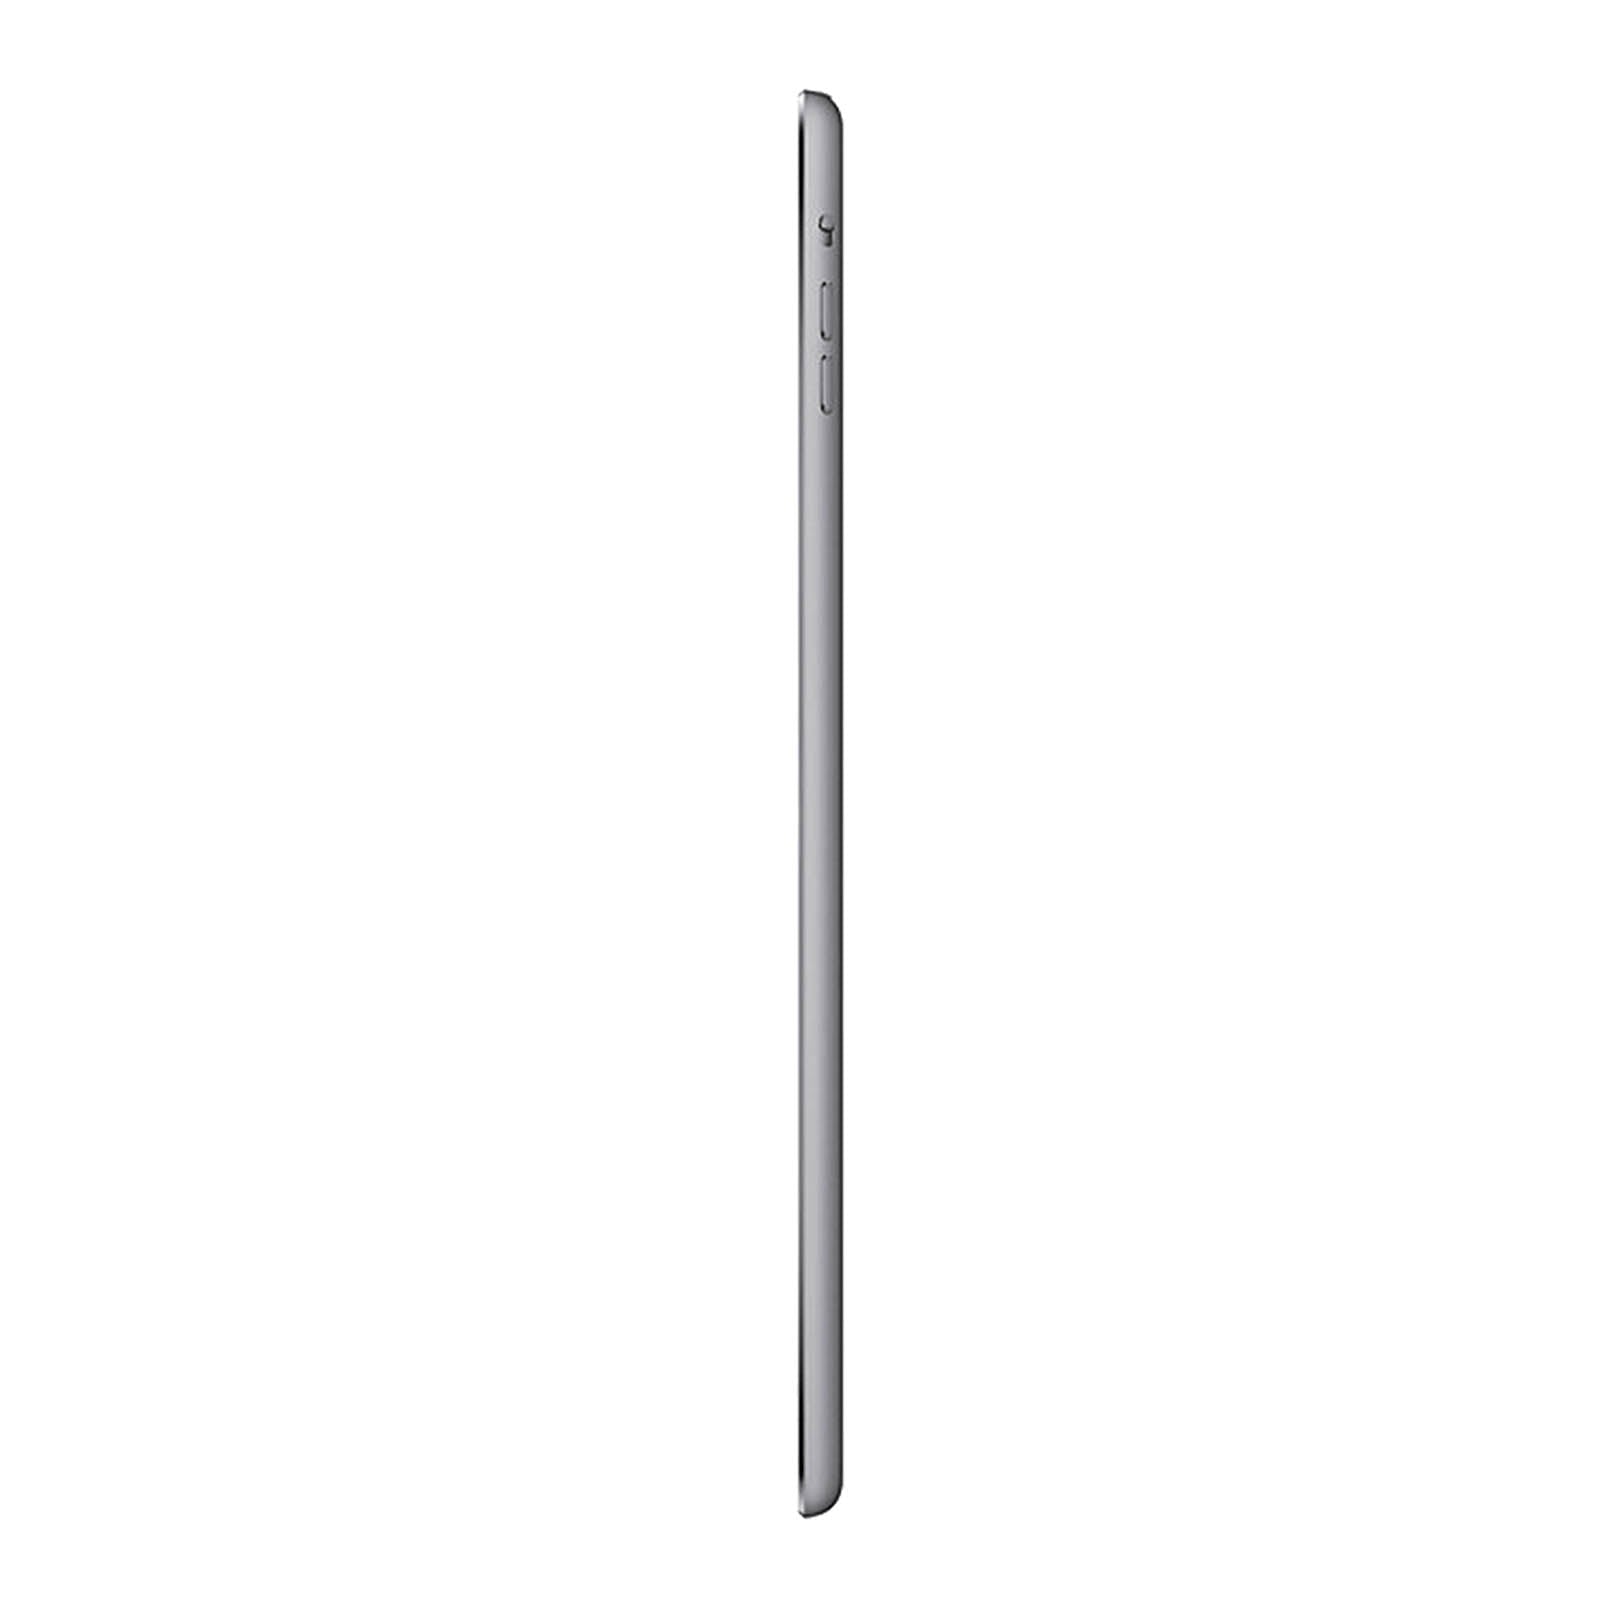 iPad Air 32GB WiFi Space Grey Good-Unlocked